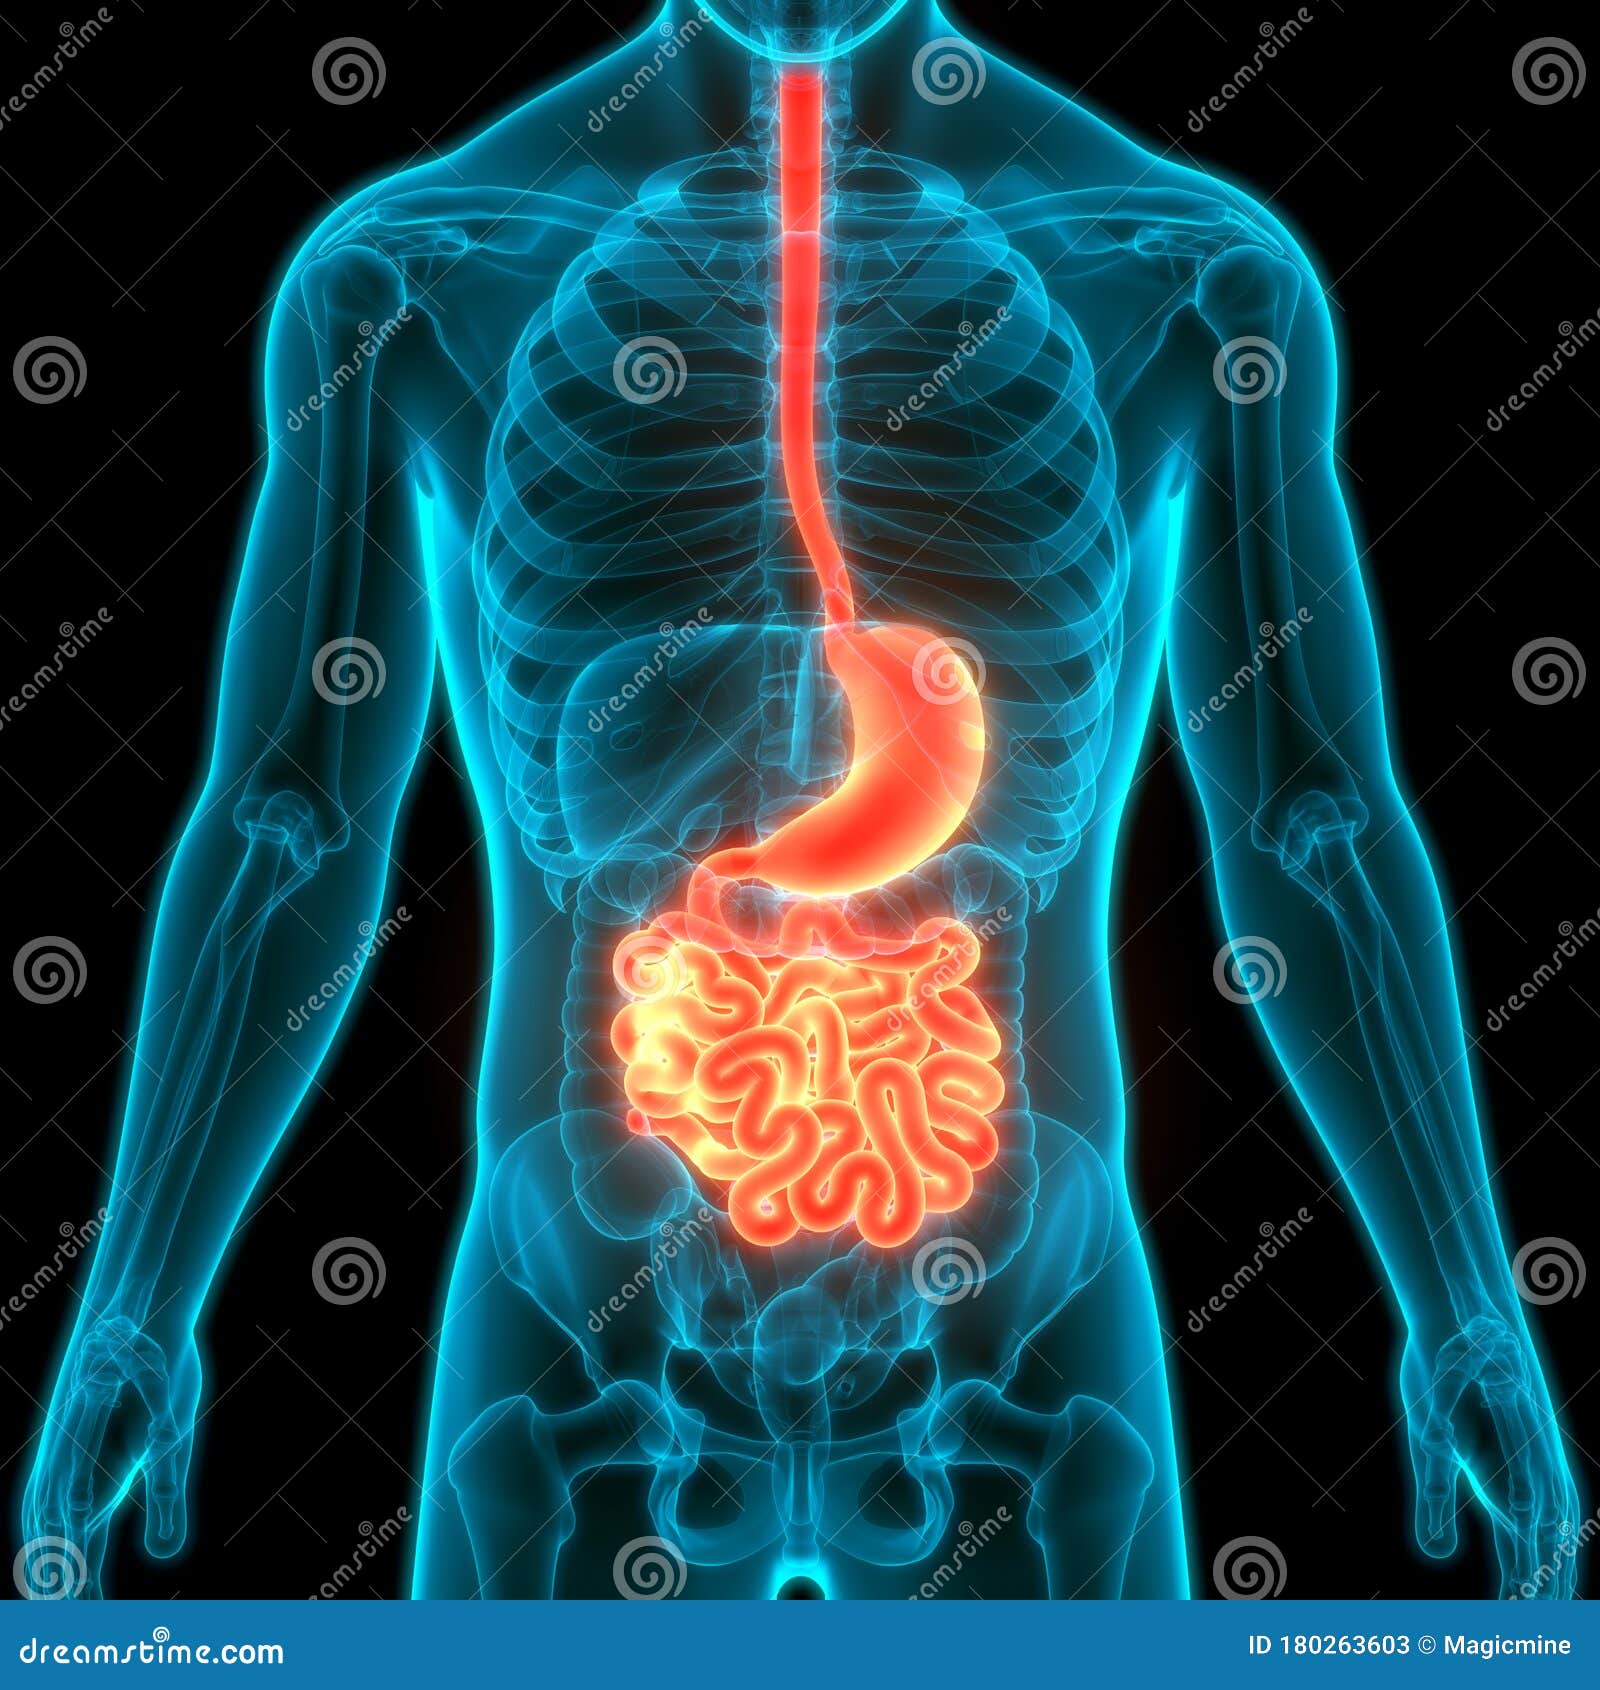 Human Internal Organs Digestive System Stomach with Small Intestine Anatomy  Stock Illustration - Illustration of appendix, bladder: 180263603